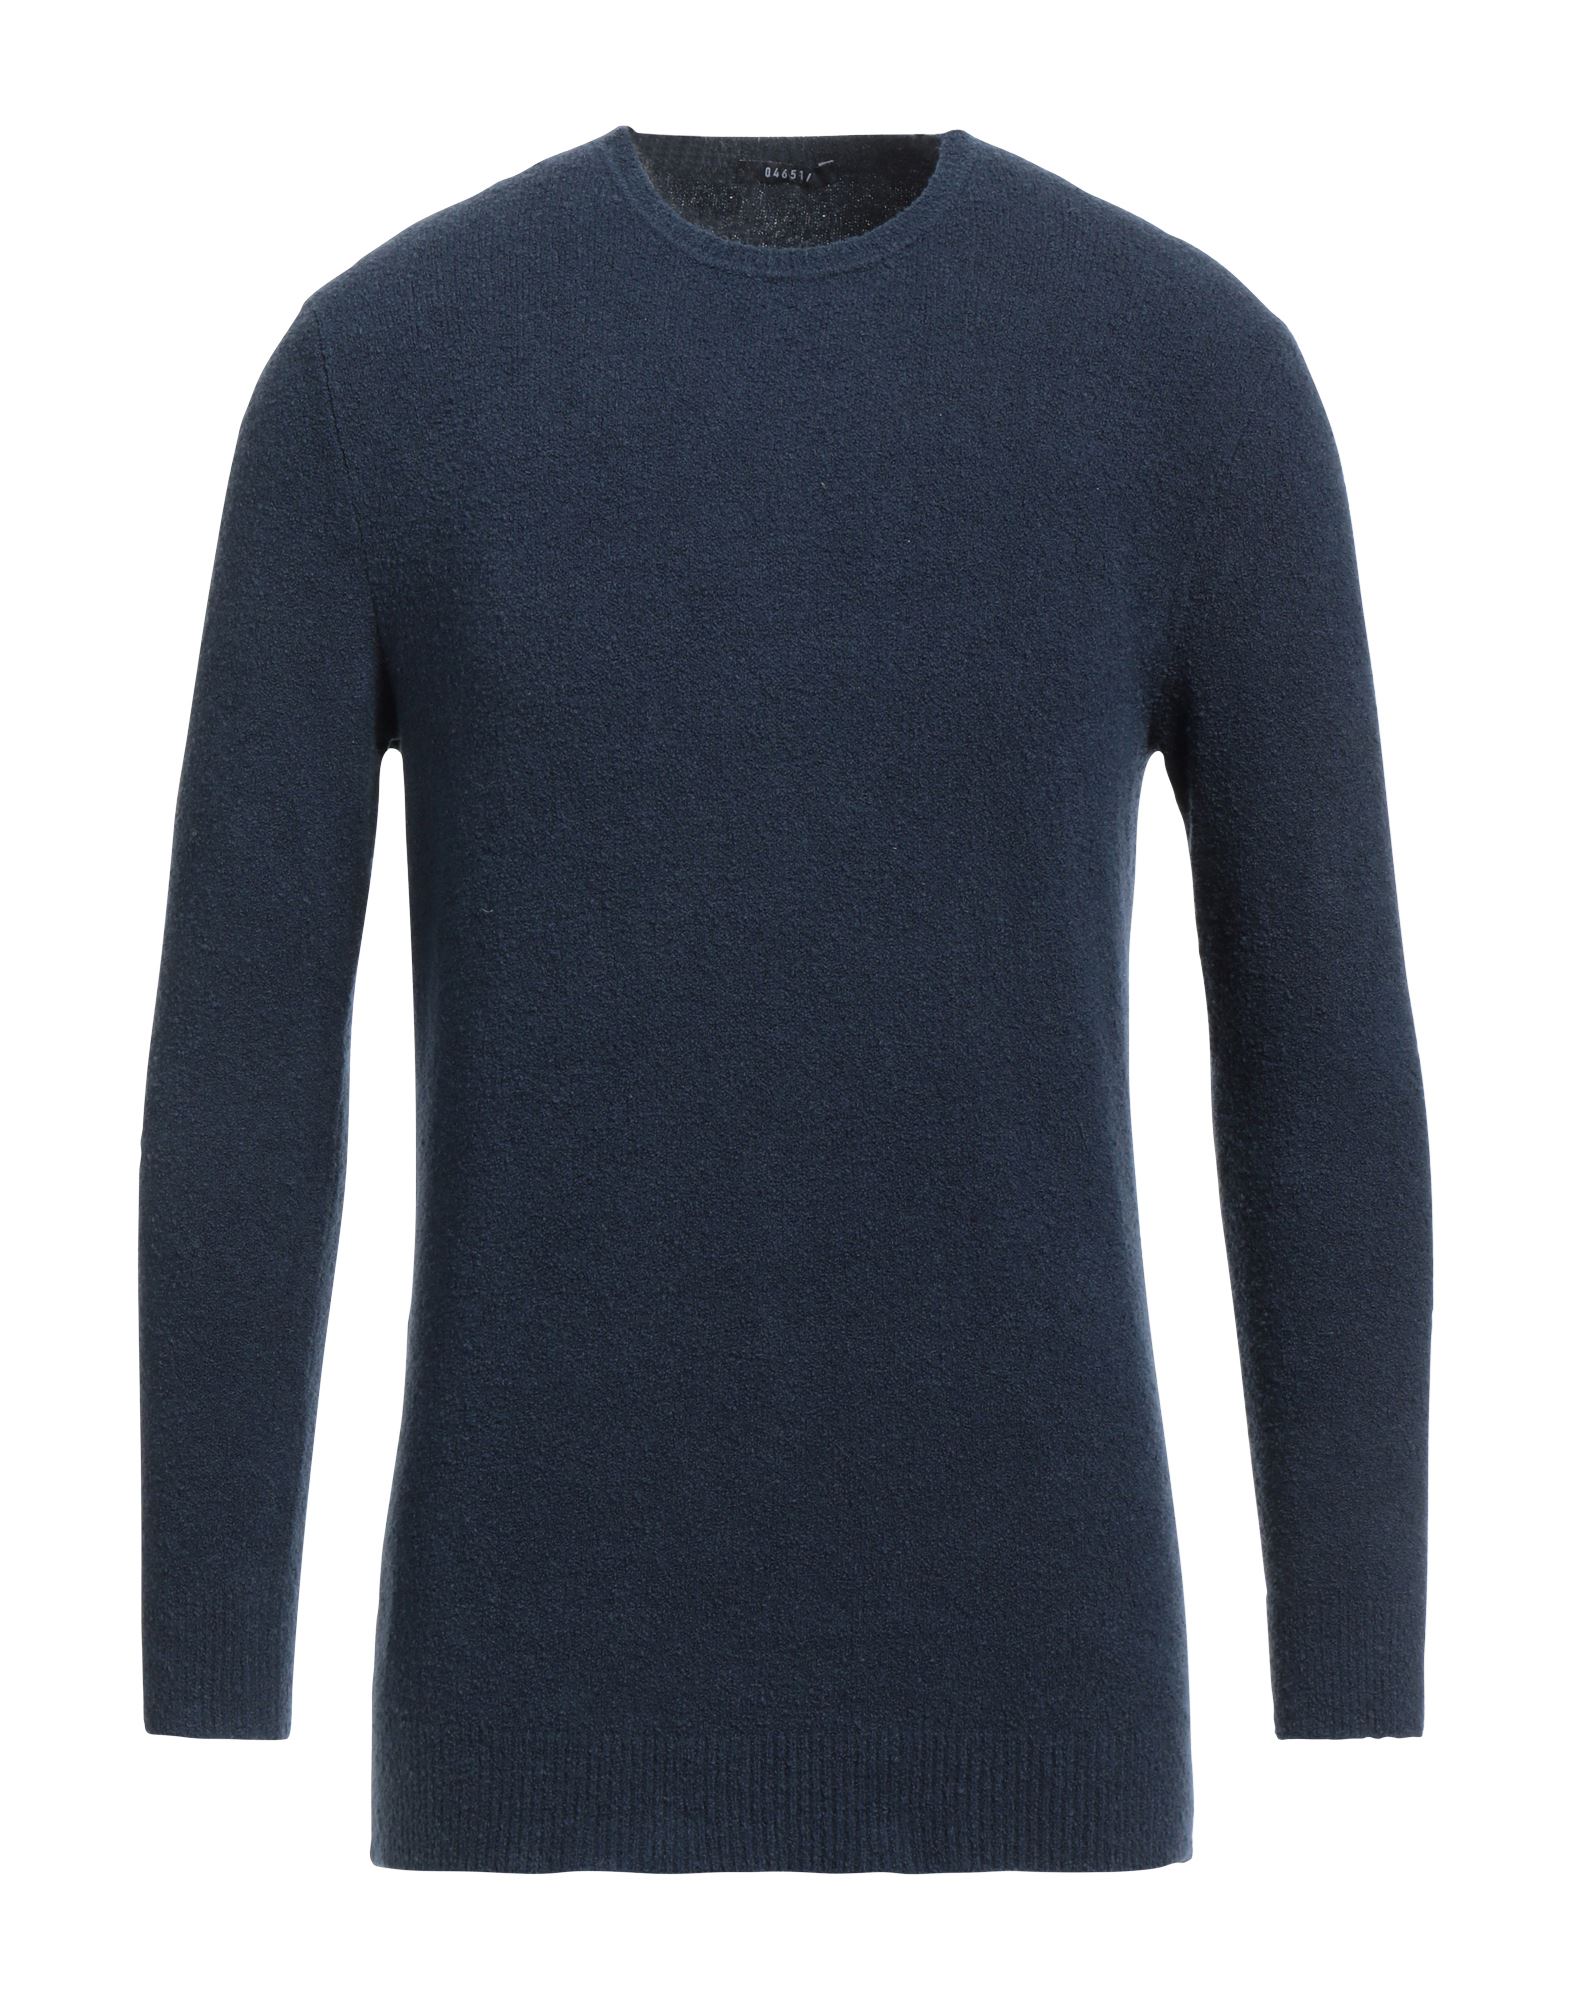 04651/a Trip In A Bag Man Sweater Navy Blue Size Xl Cotton, Nylon, Elastane